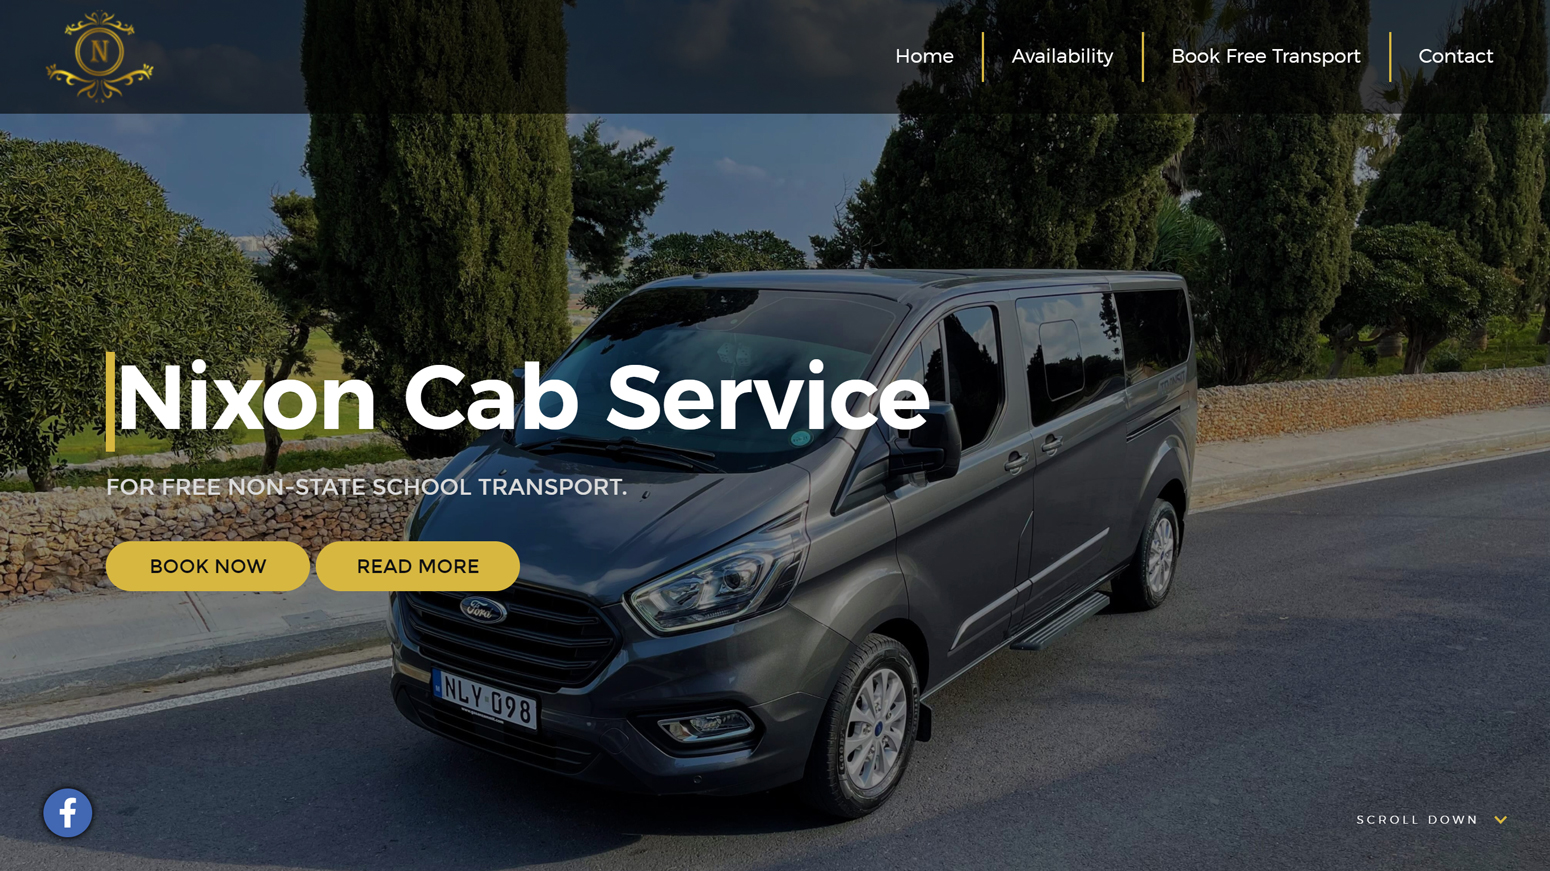 Nixon Cab Service Website